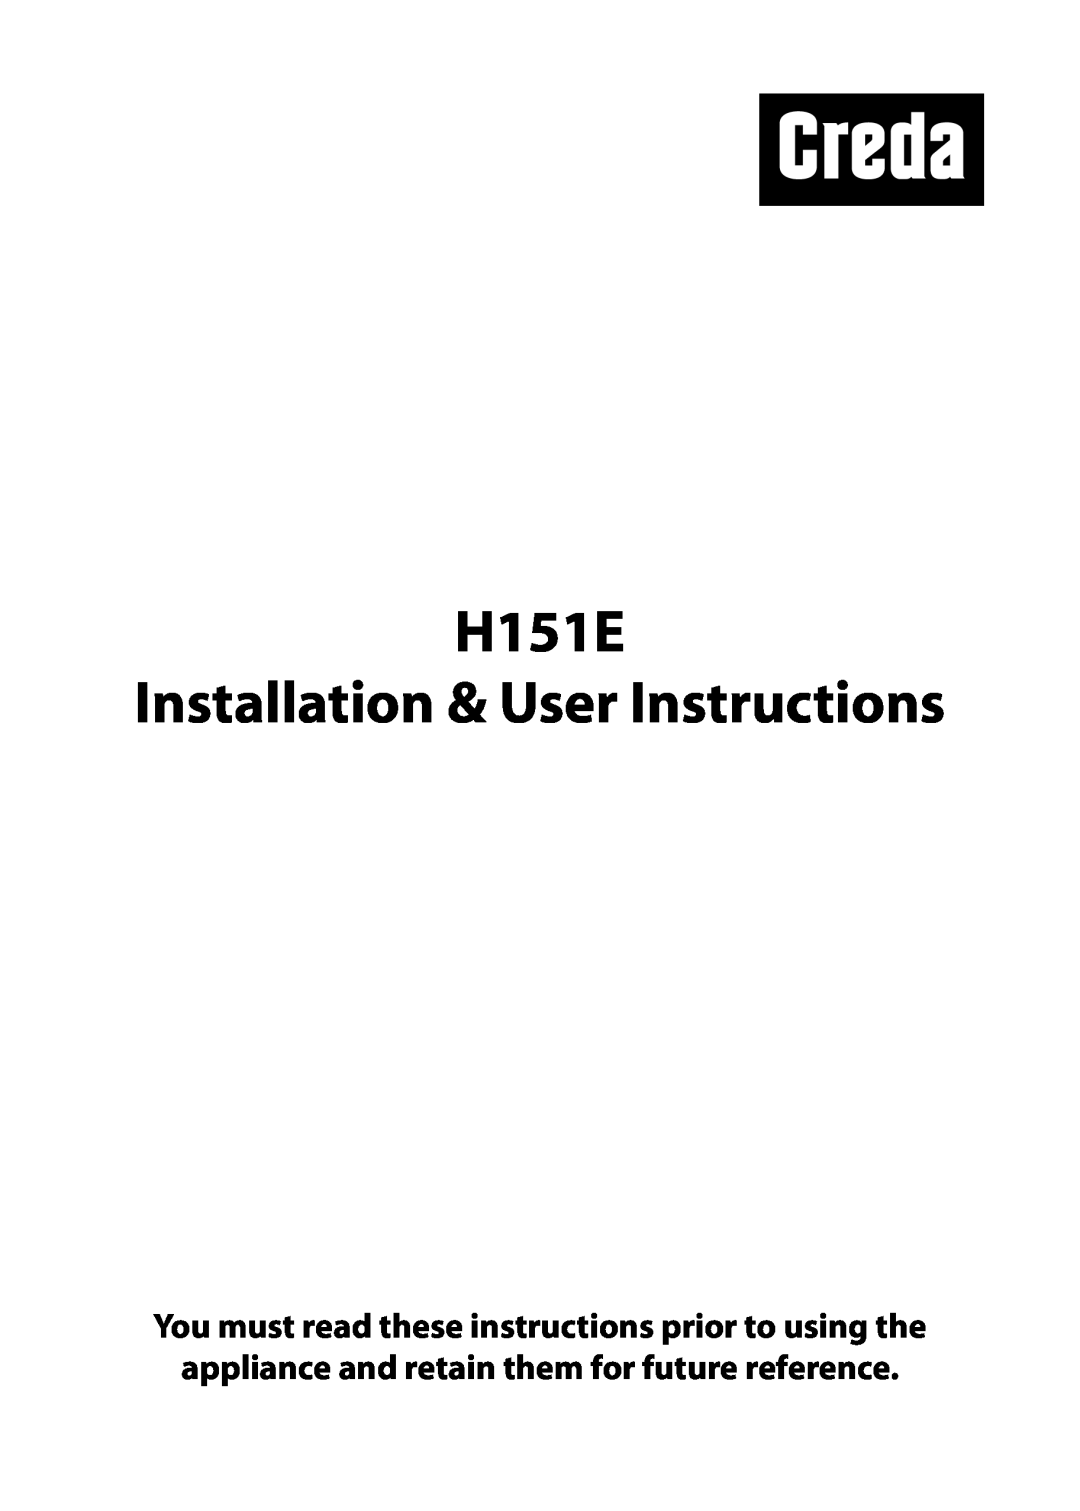 Creda manual H151E Installation & User Instructions 